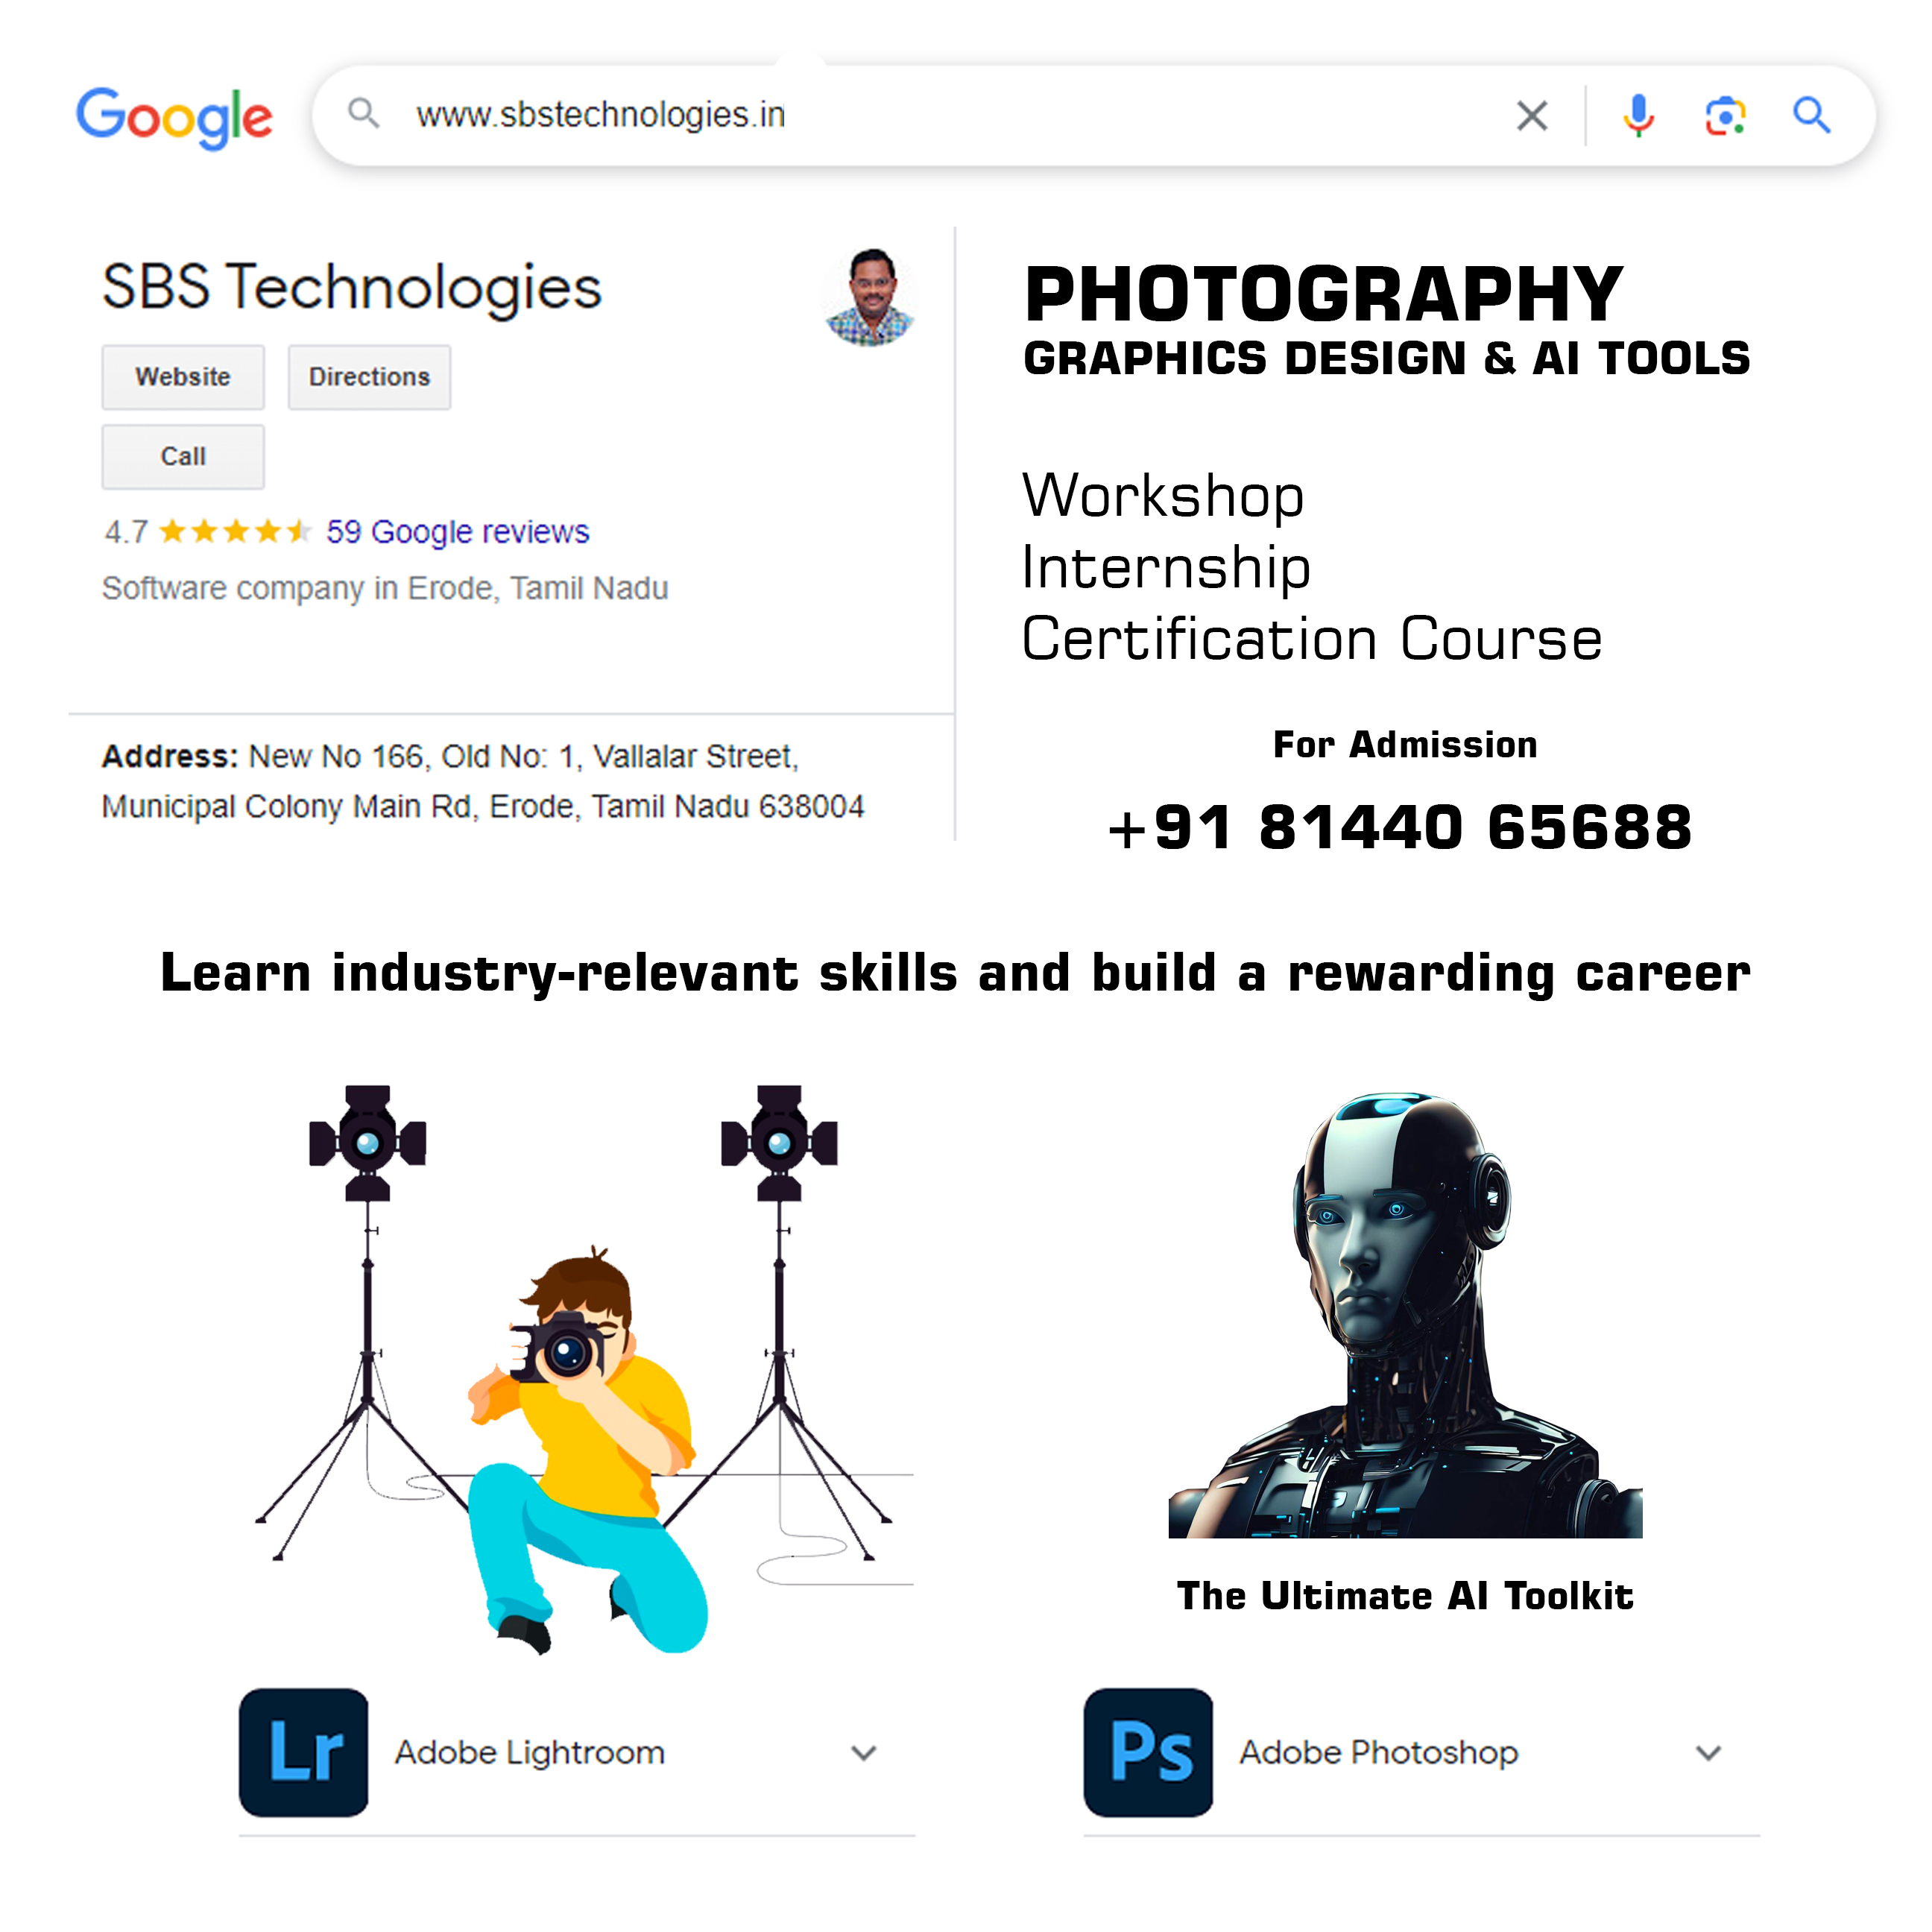 Photography, Graphics Design & AI Tools